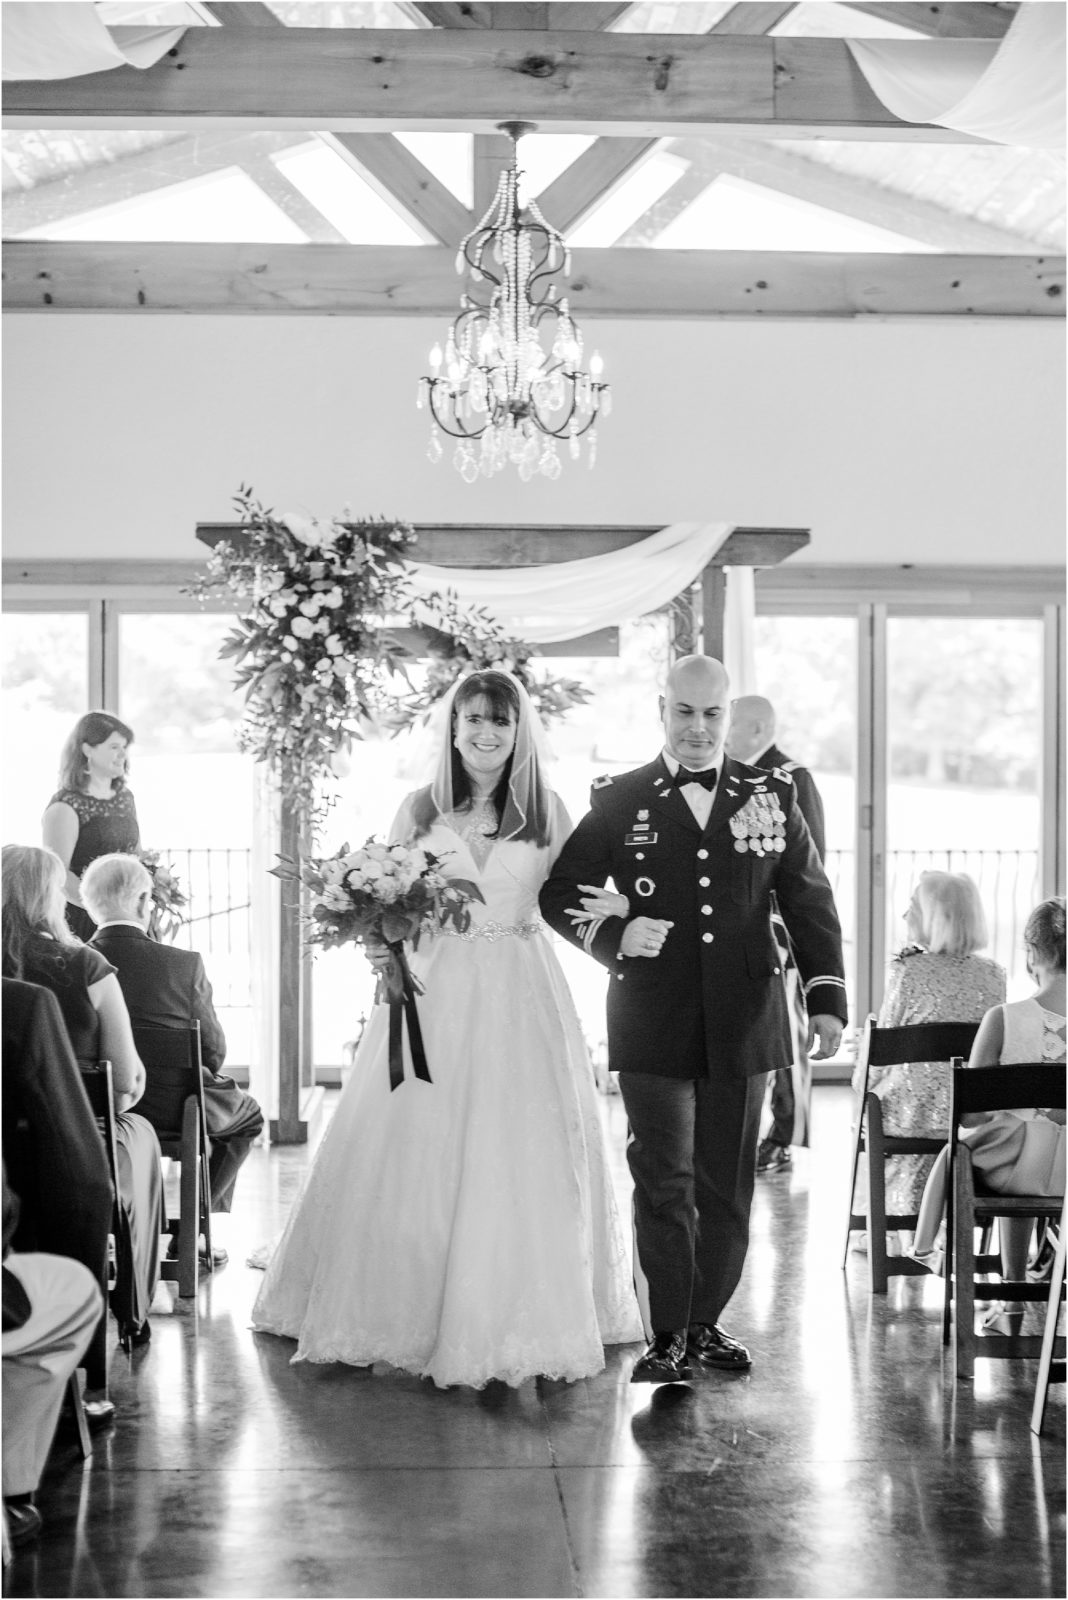 Military husband and bride walking down aisle